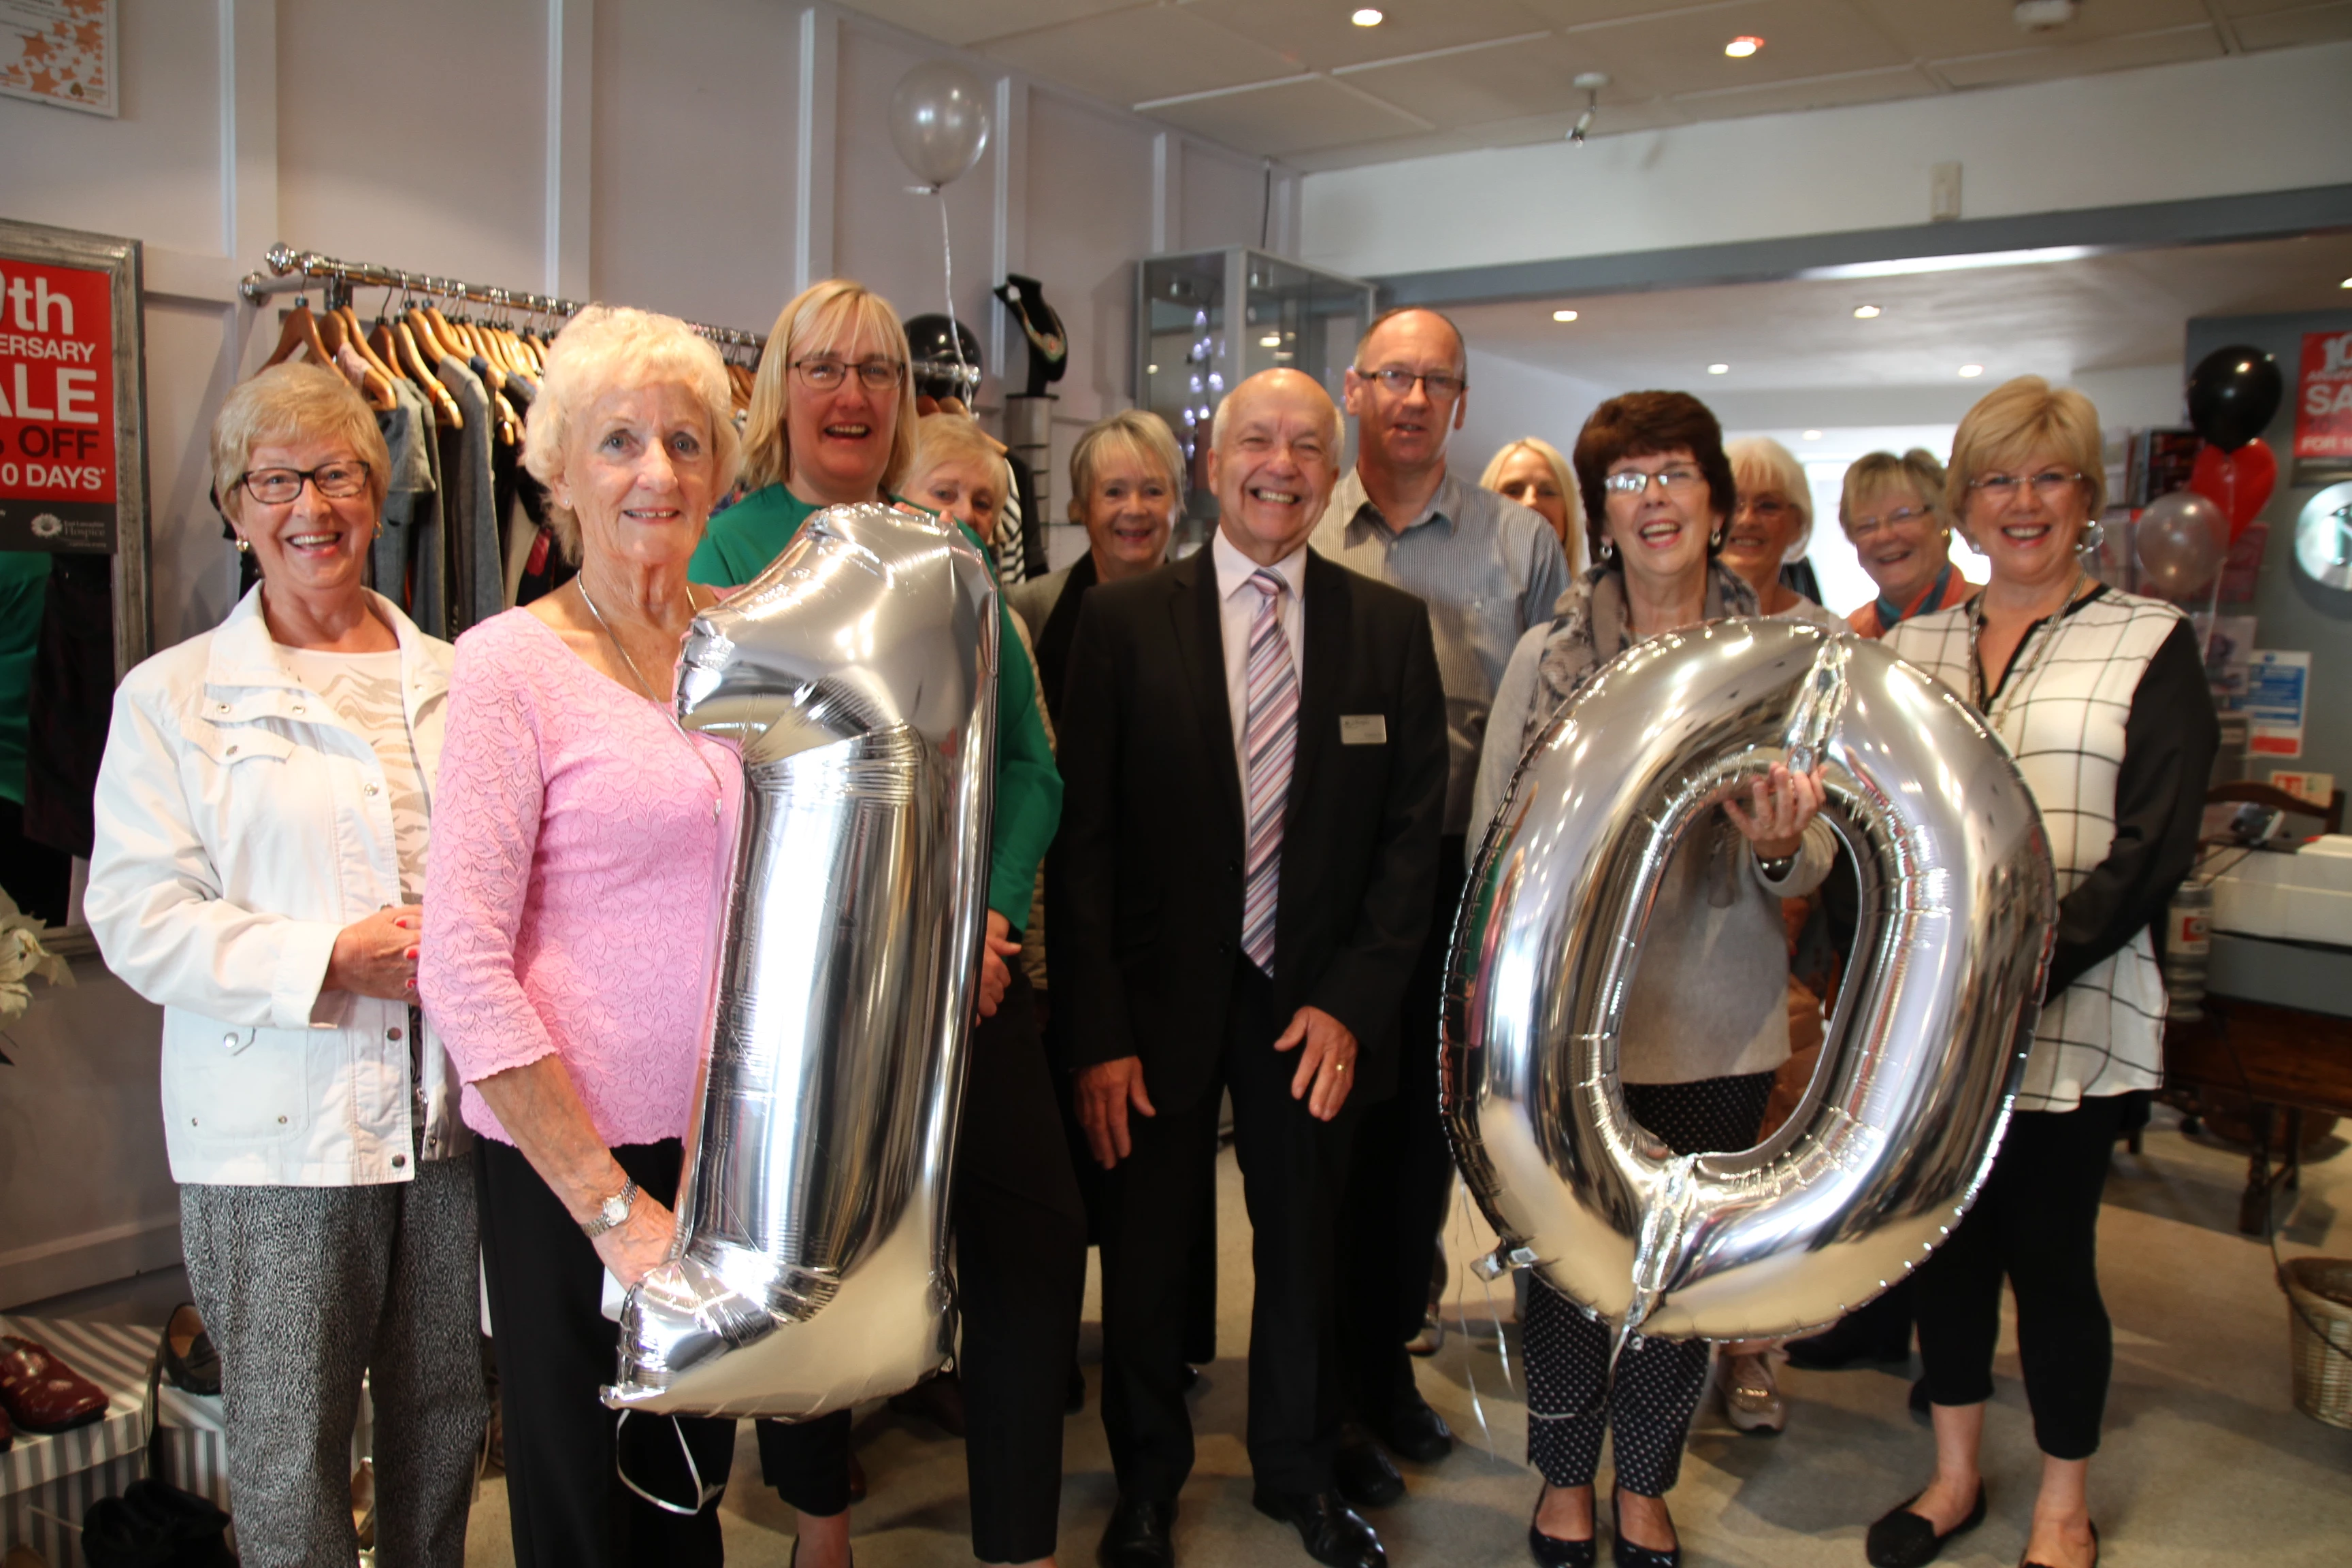 East Lancashire Hospice's Clitheroe shop celebrates 10th anniversary